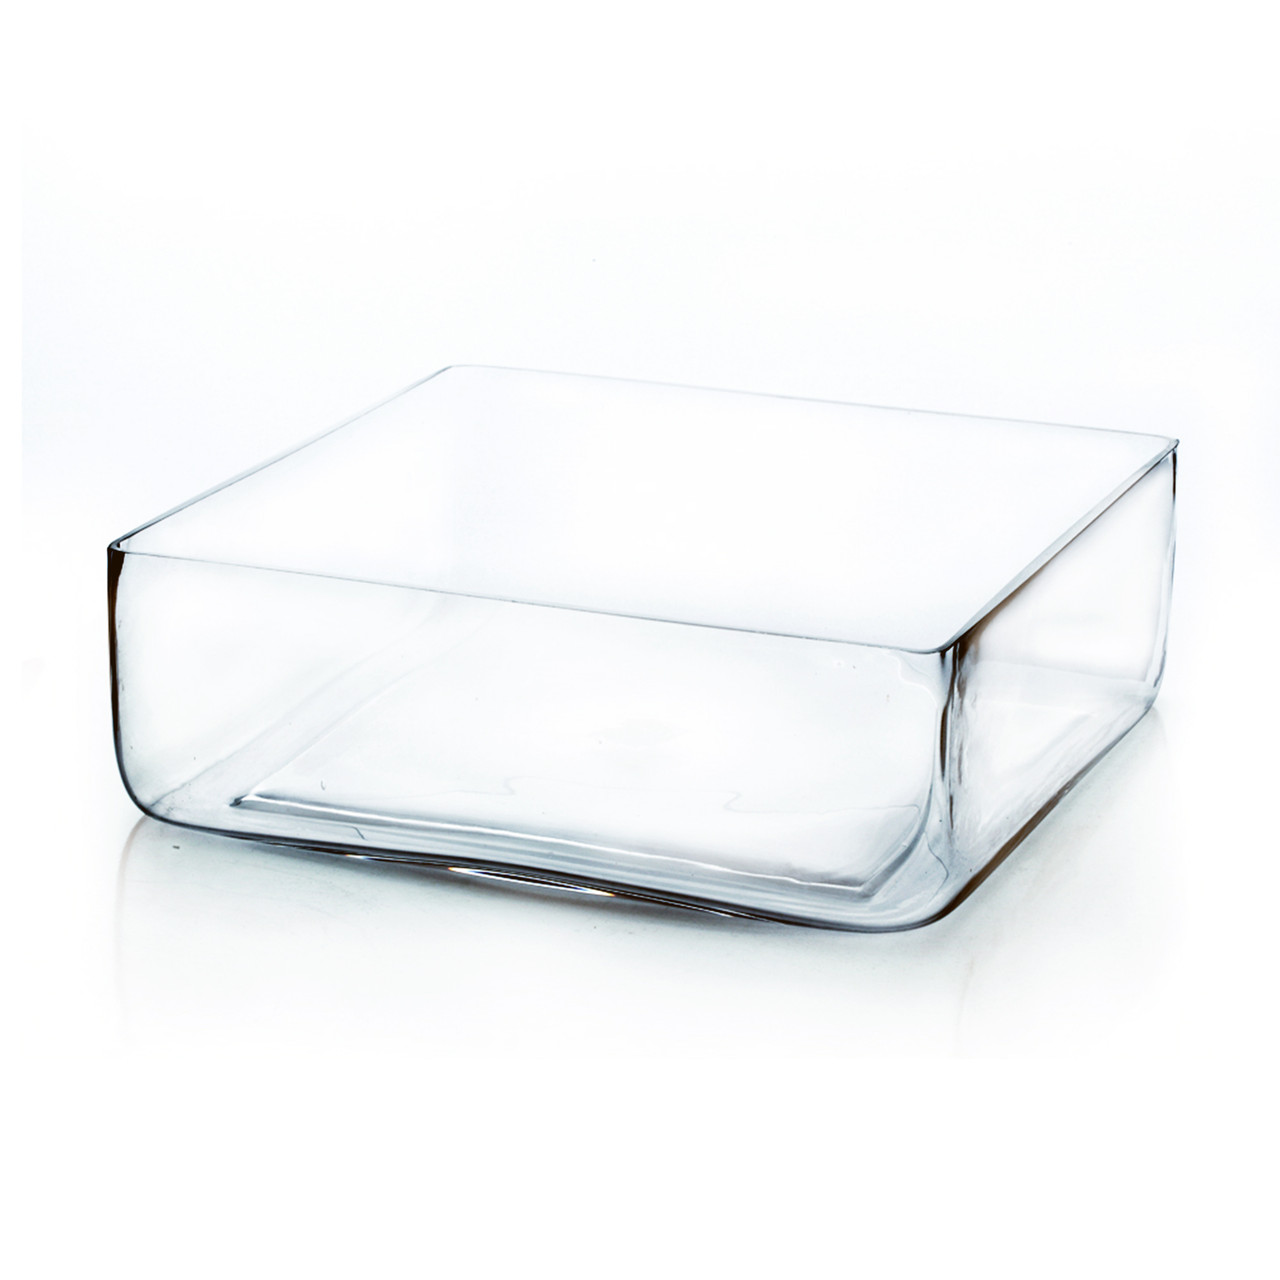 VPB4436 - Rectangular Plate Glass Planter Box - 4 x 4 x 36